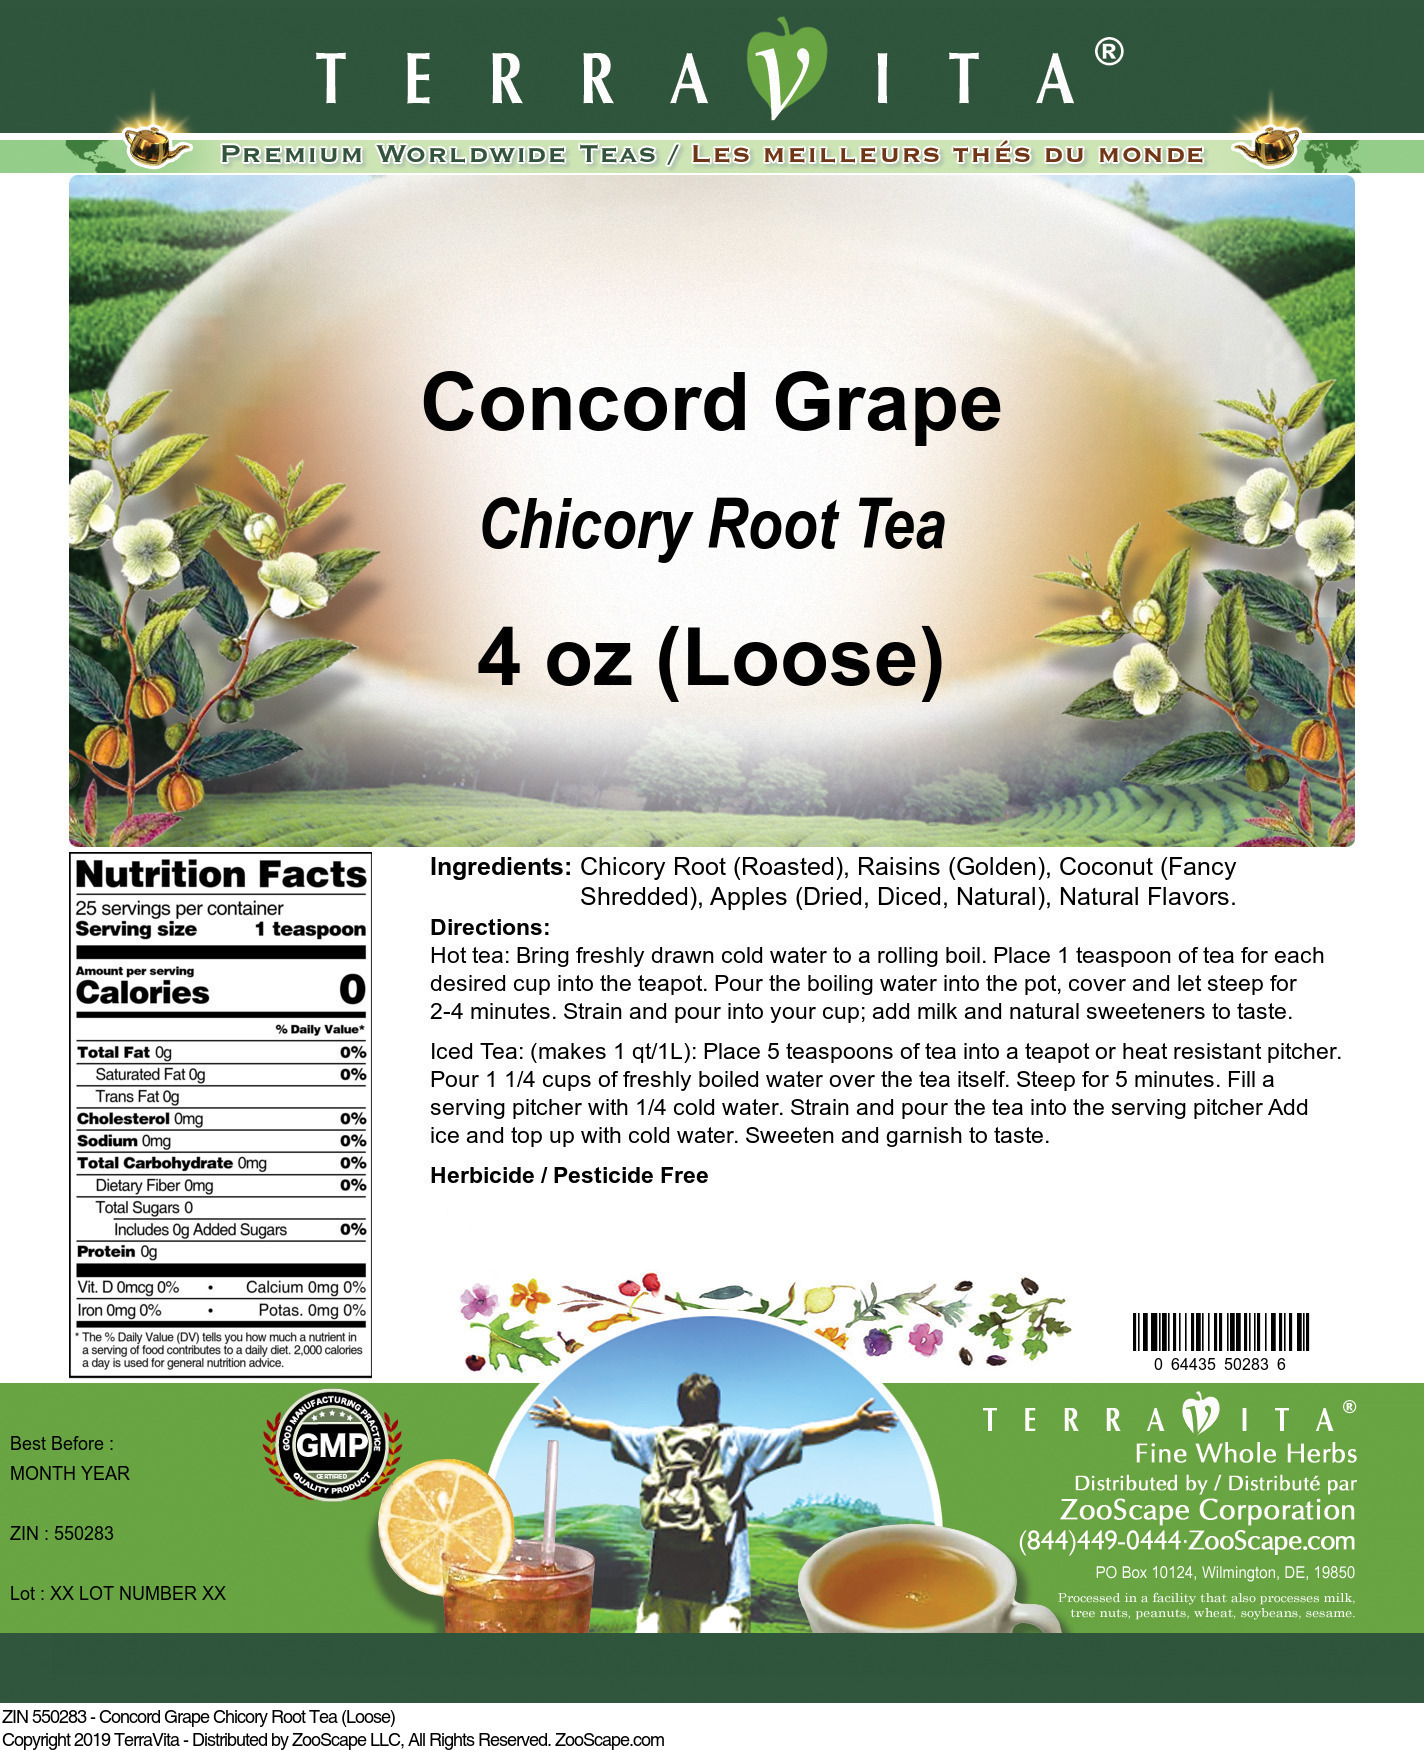 Concord Grape Chicory Root Tea (Loose) - Label